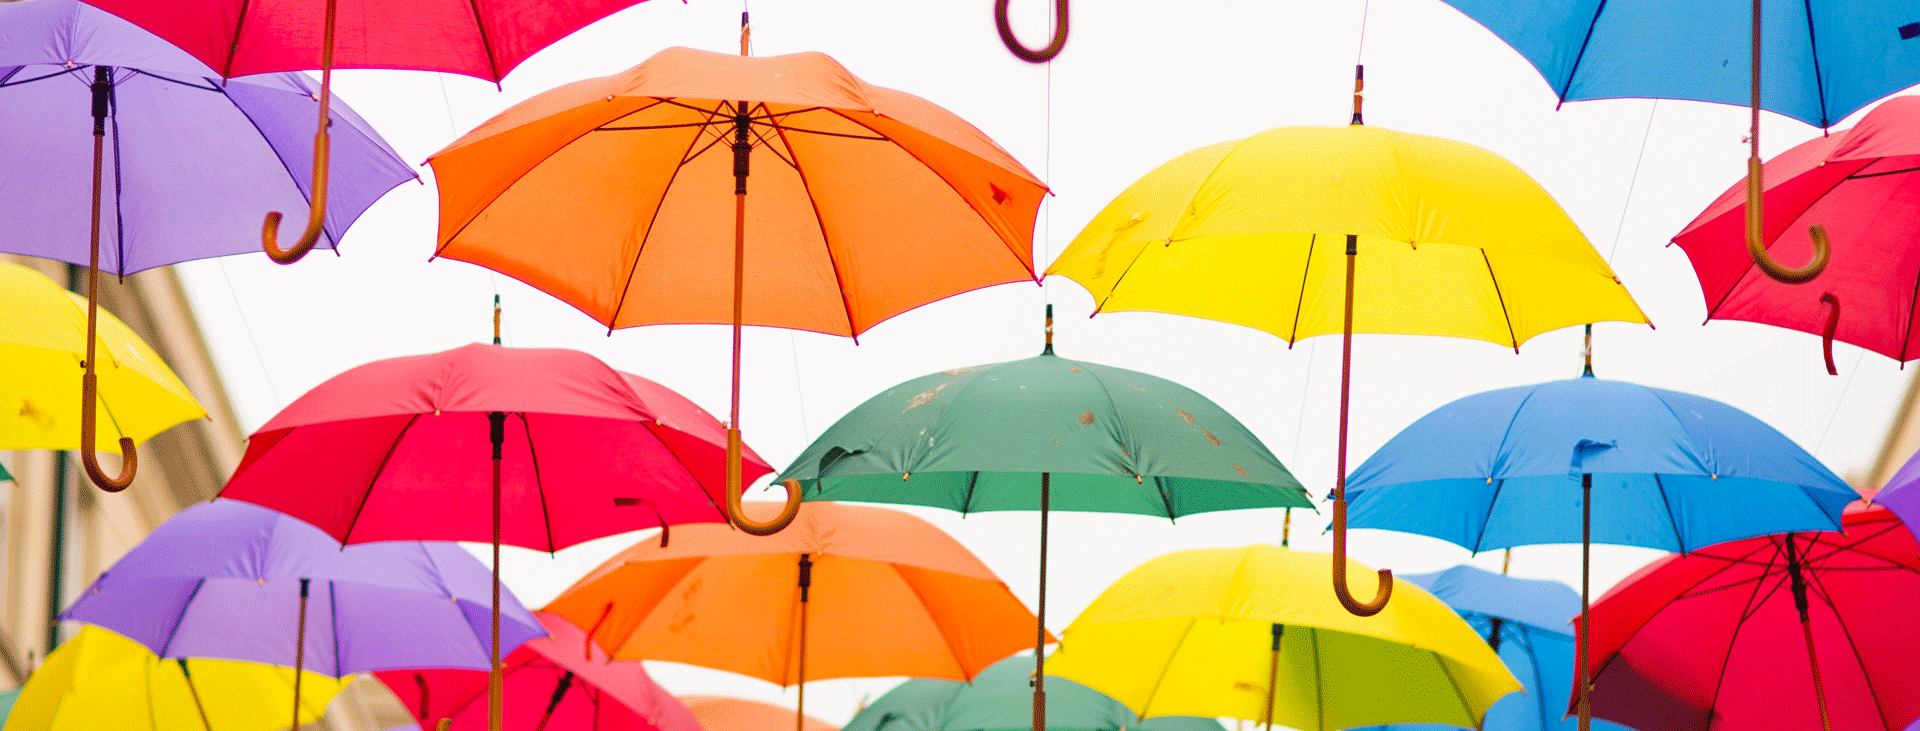 Many colorful umbrellas